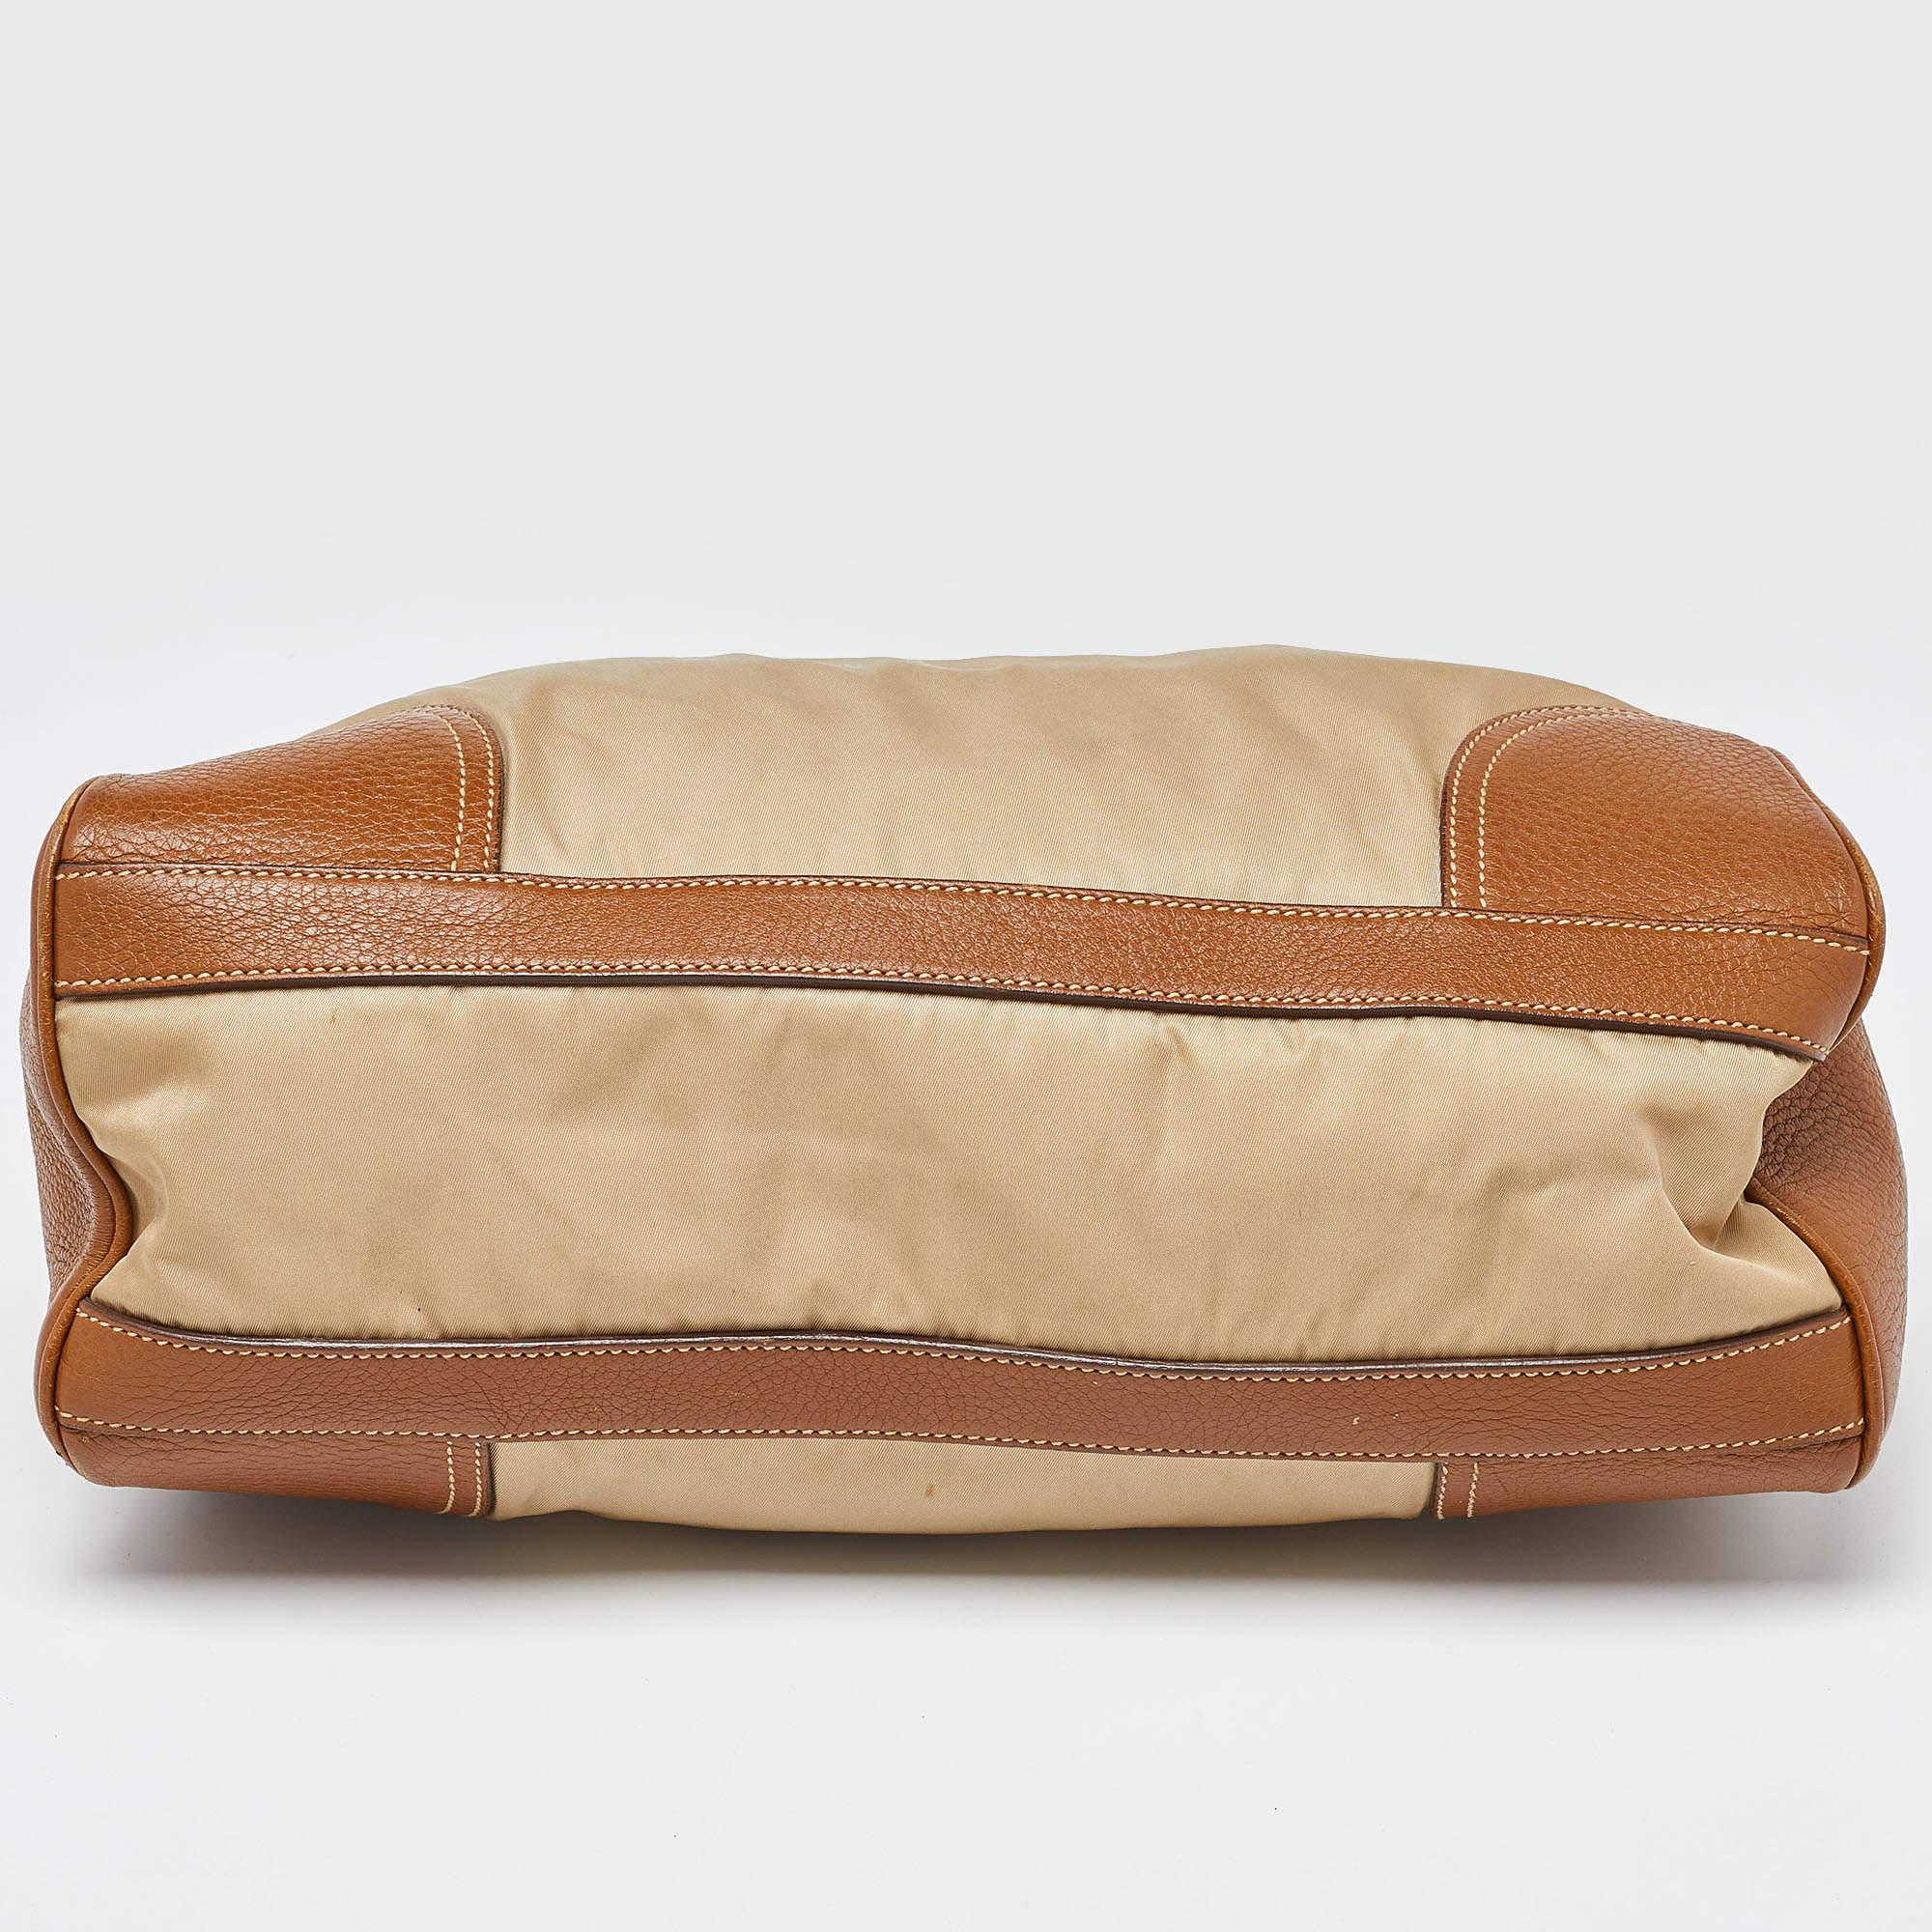 Prada Beige/Brown Leather and Nylon Logo Satchel For Sale 2